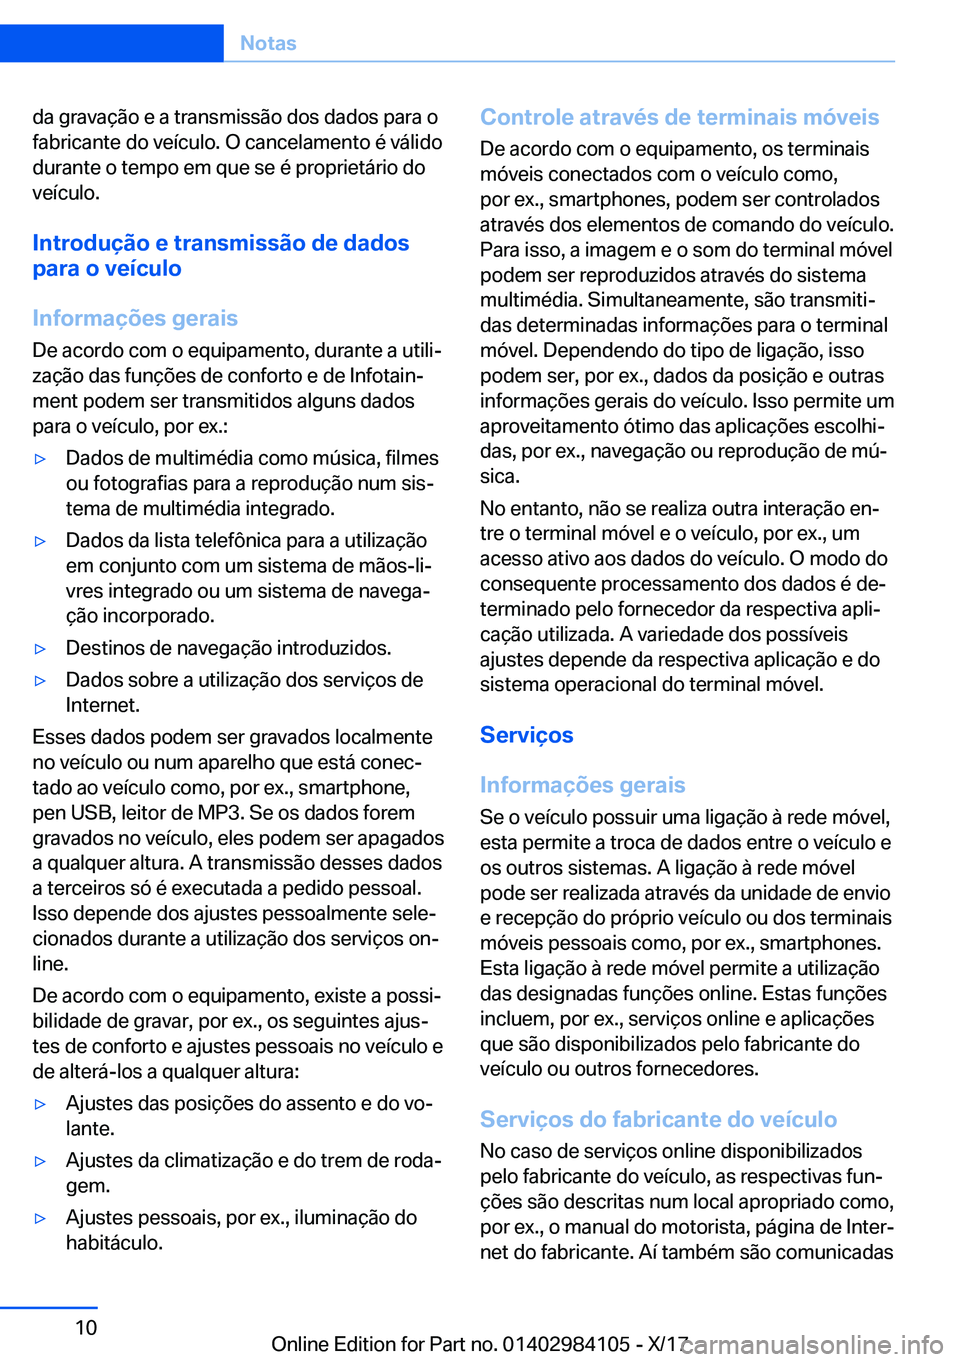 BMW 3 SERIES 2018  Manual do condutor (in Portuguese) �d�a� �g�r�a�v�a�